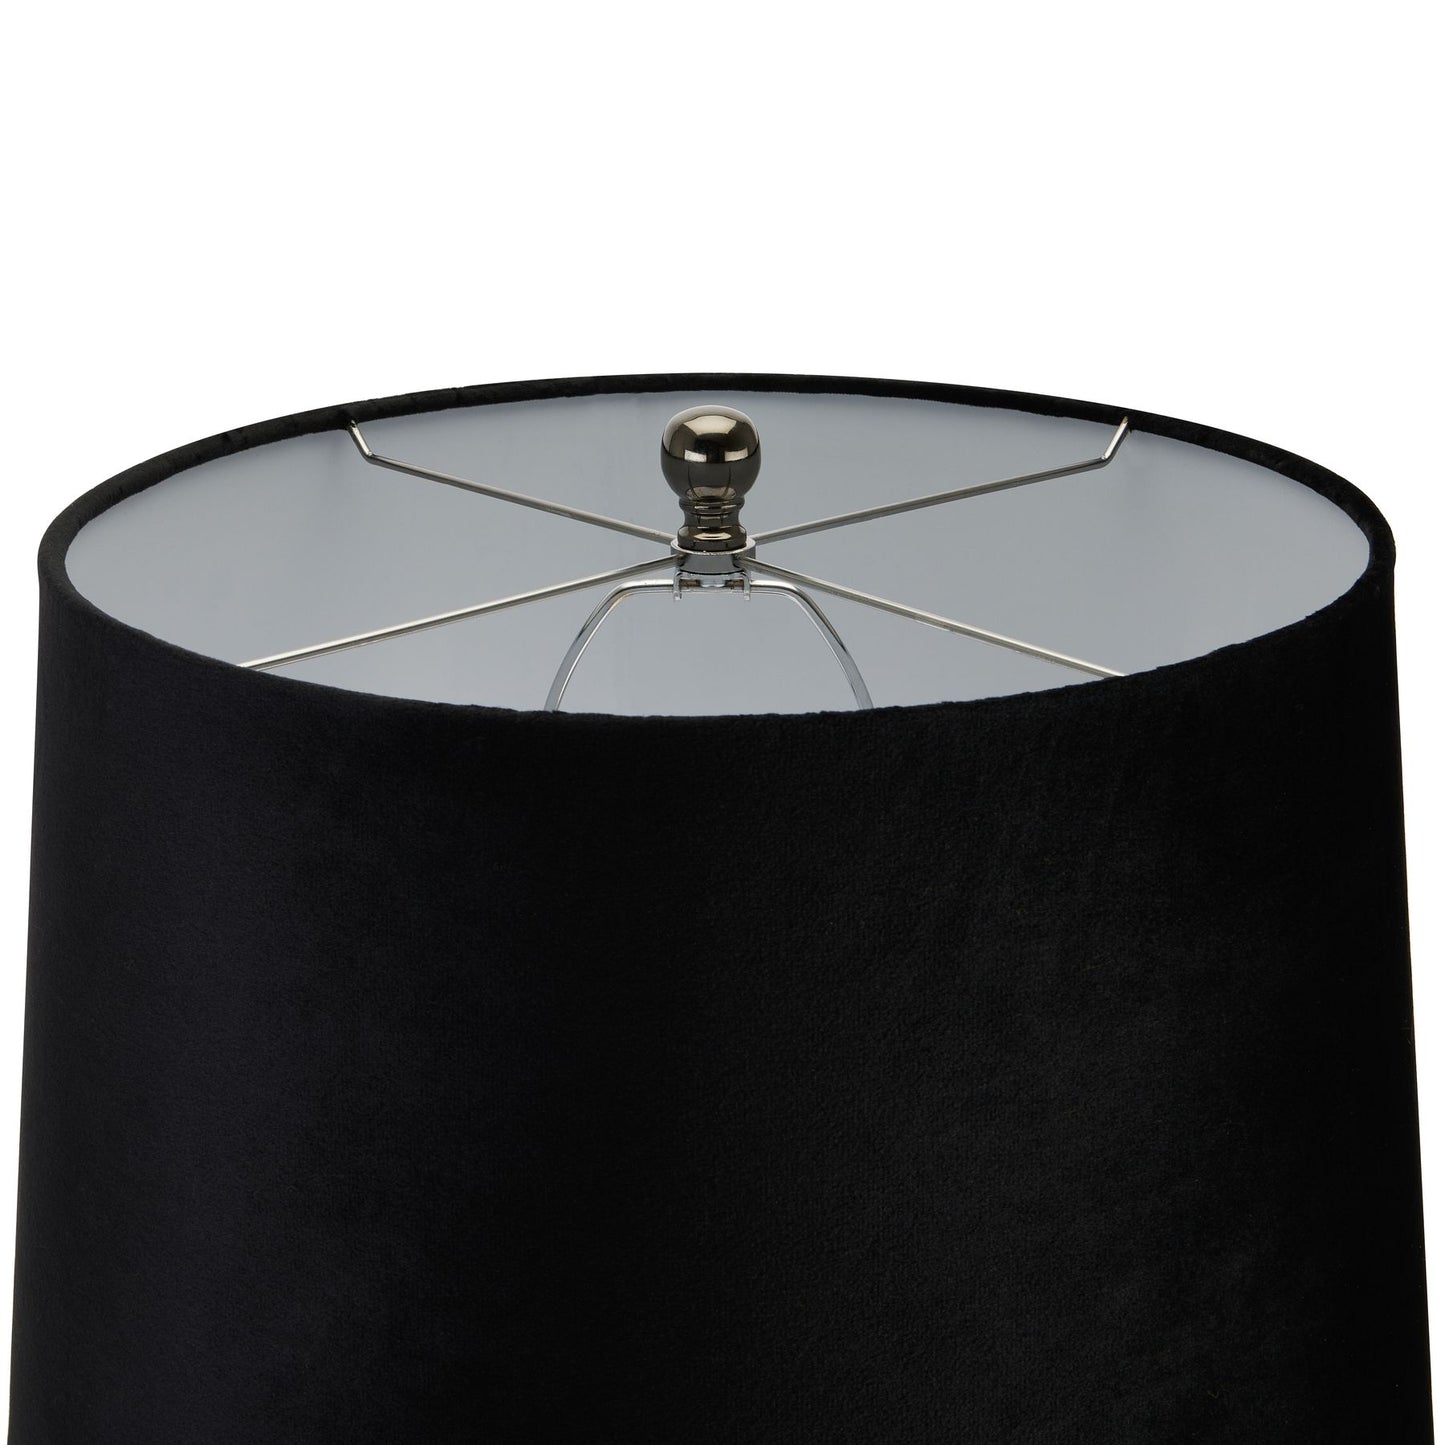 Black & Grey Tortoiseshell Urn Table Lamp